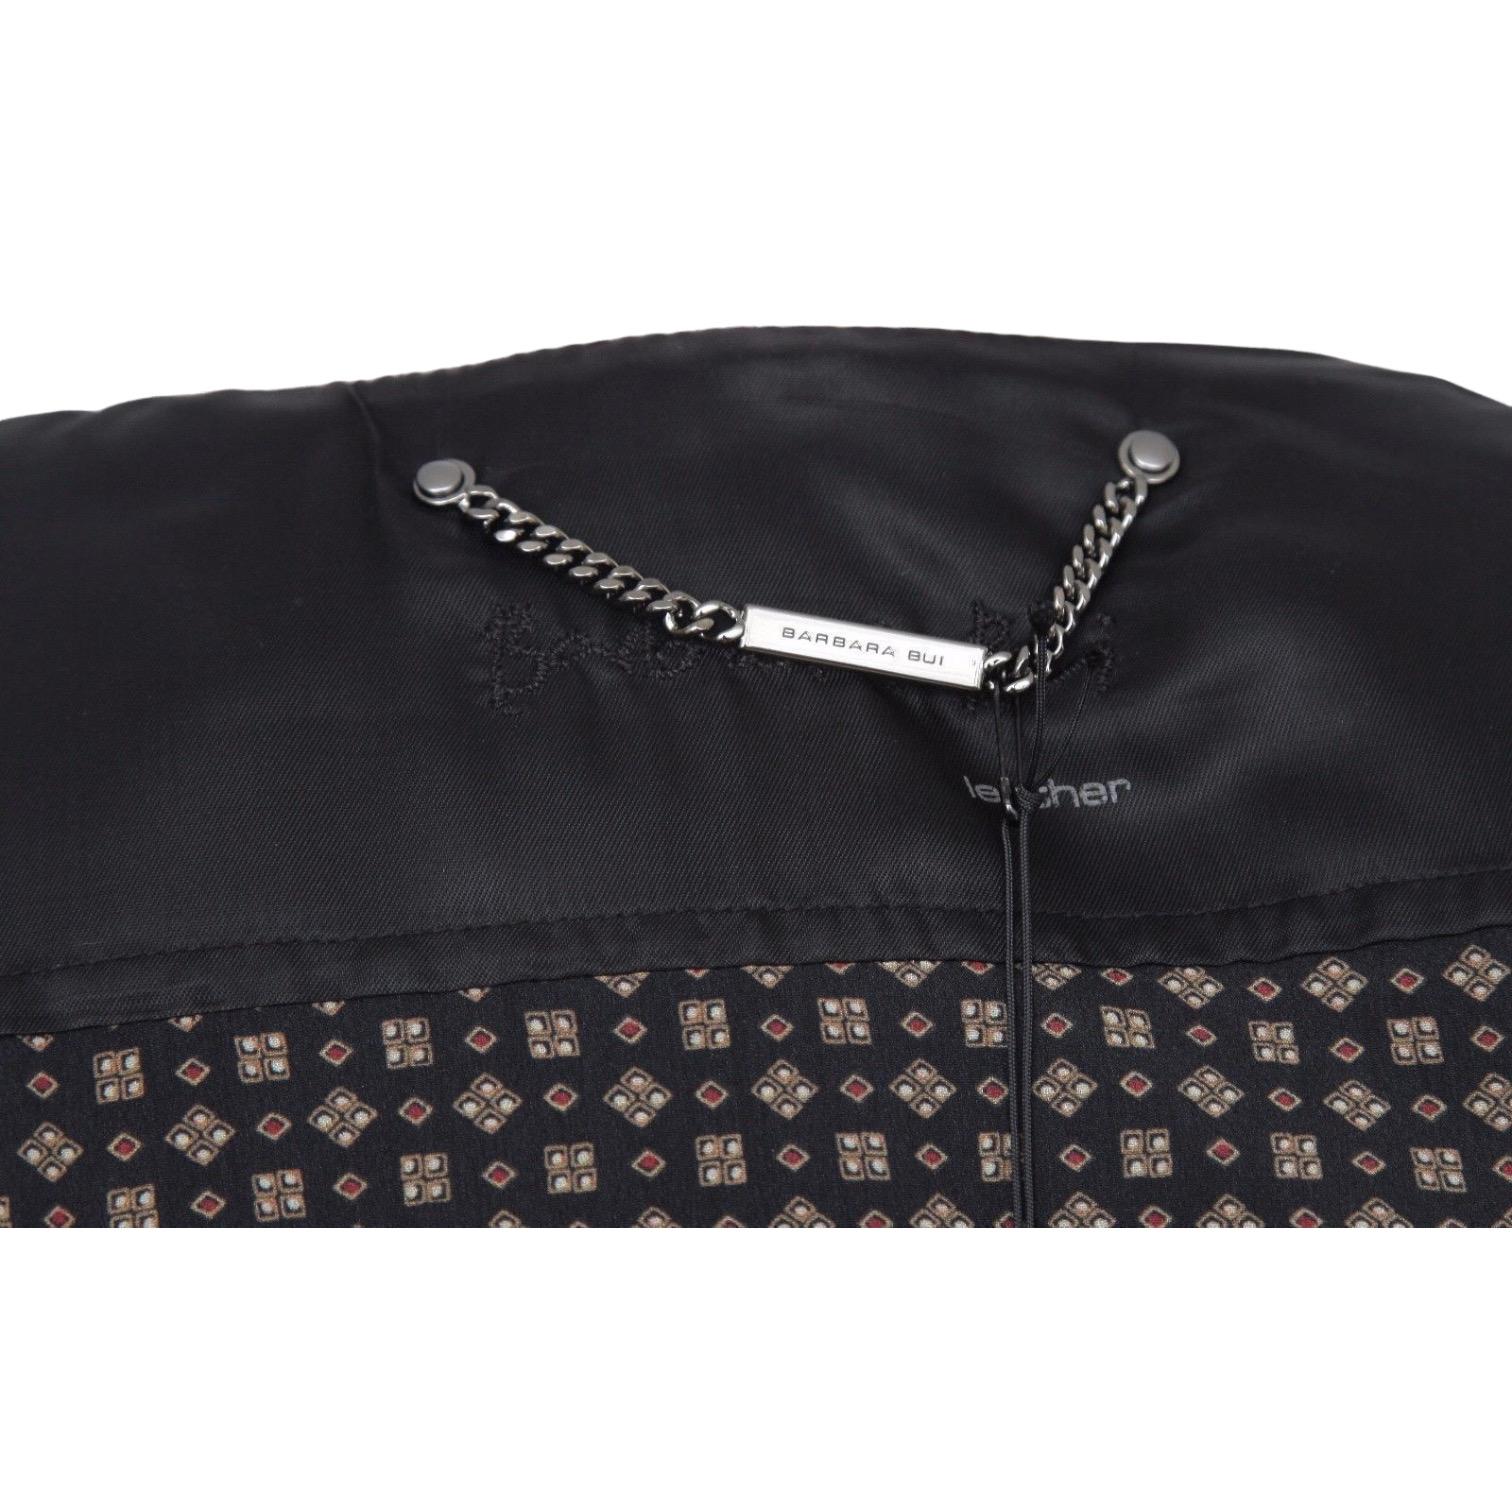 BARBARA BUI Jacket Leather Moto Coat Powder Pink Long Sleeve Zipper Sz 42 $2350 5